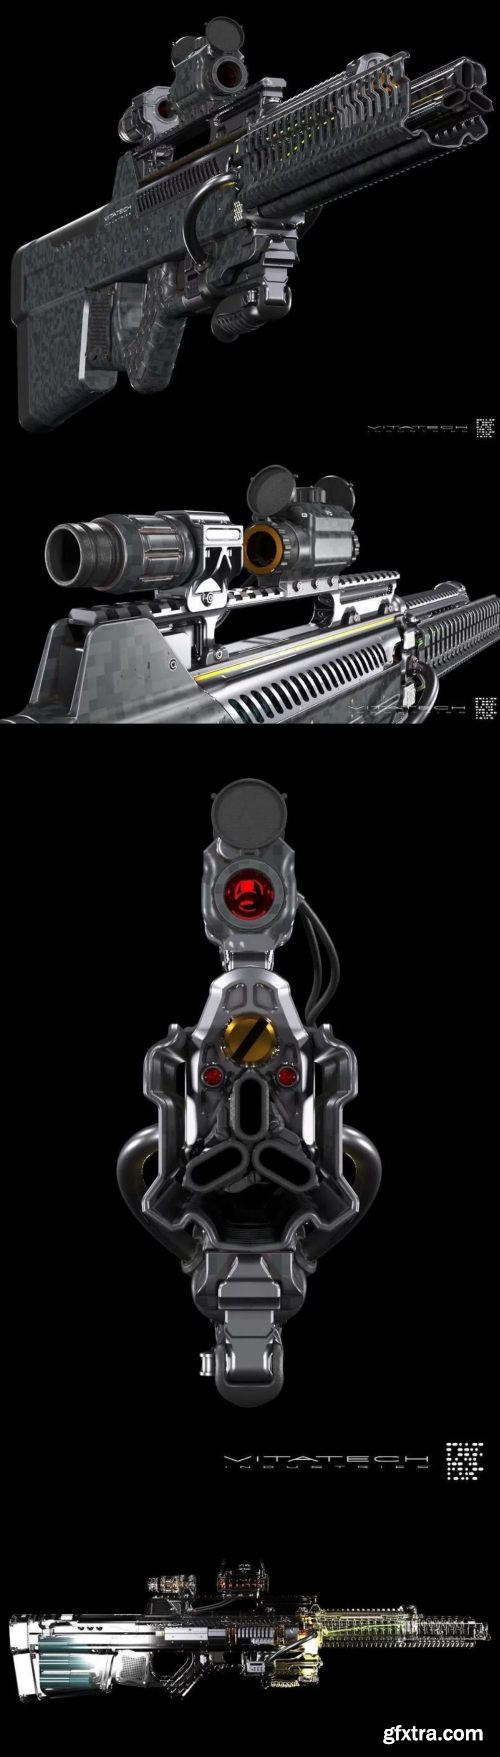 Sci-fi concept Laser Rifle